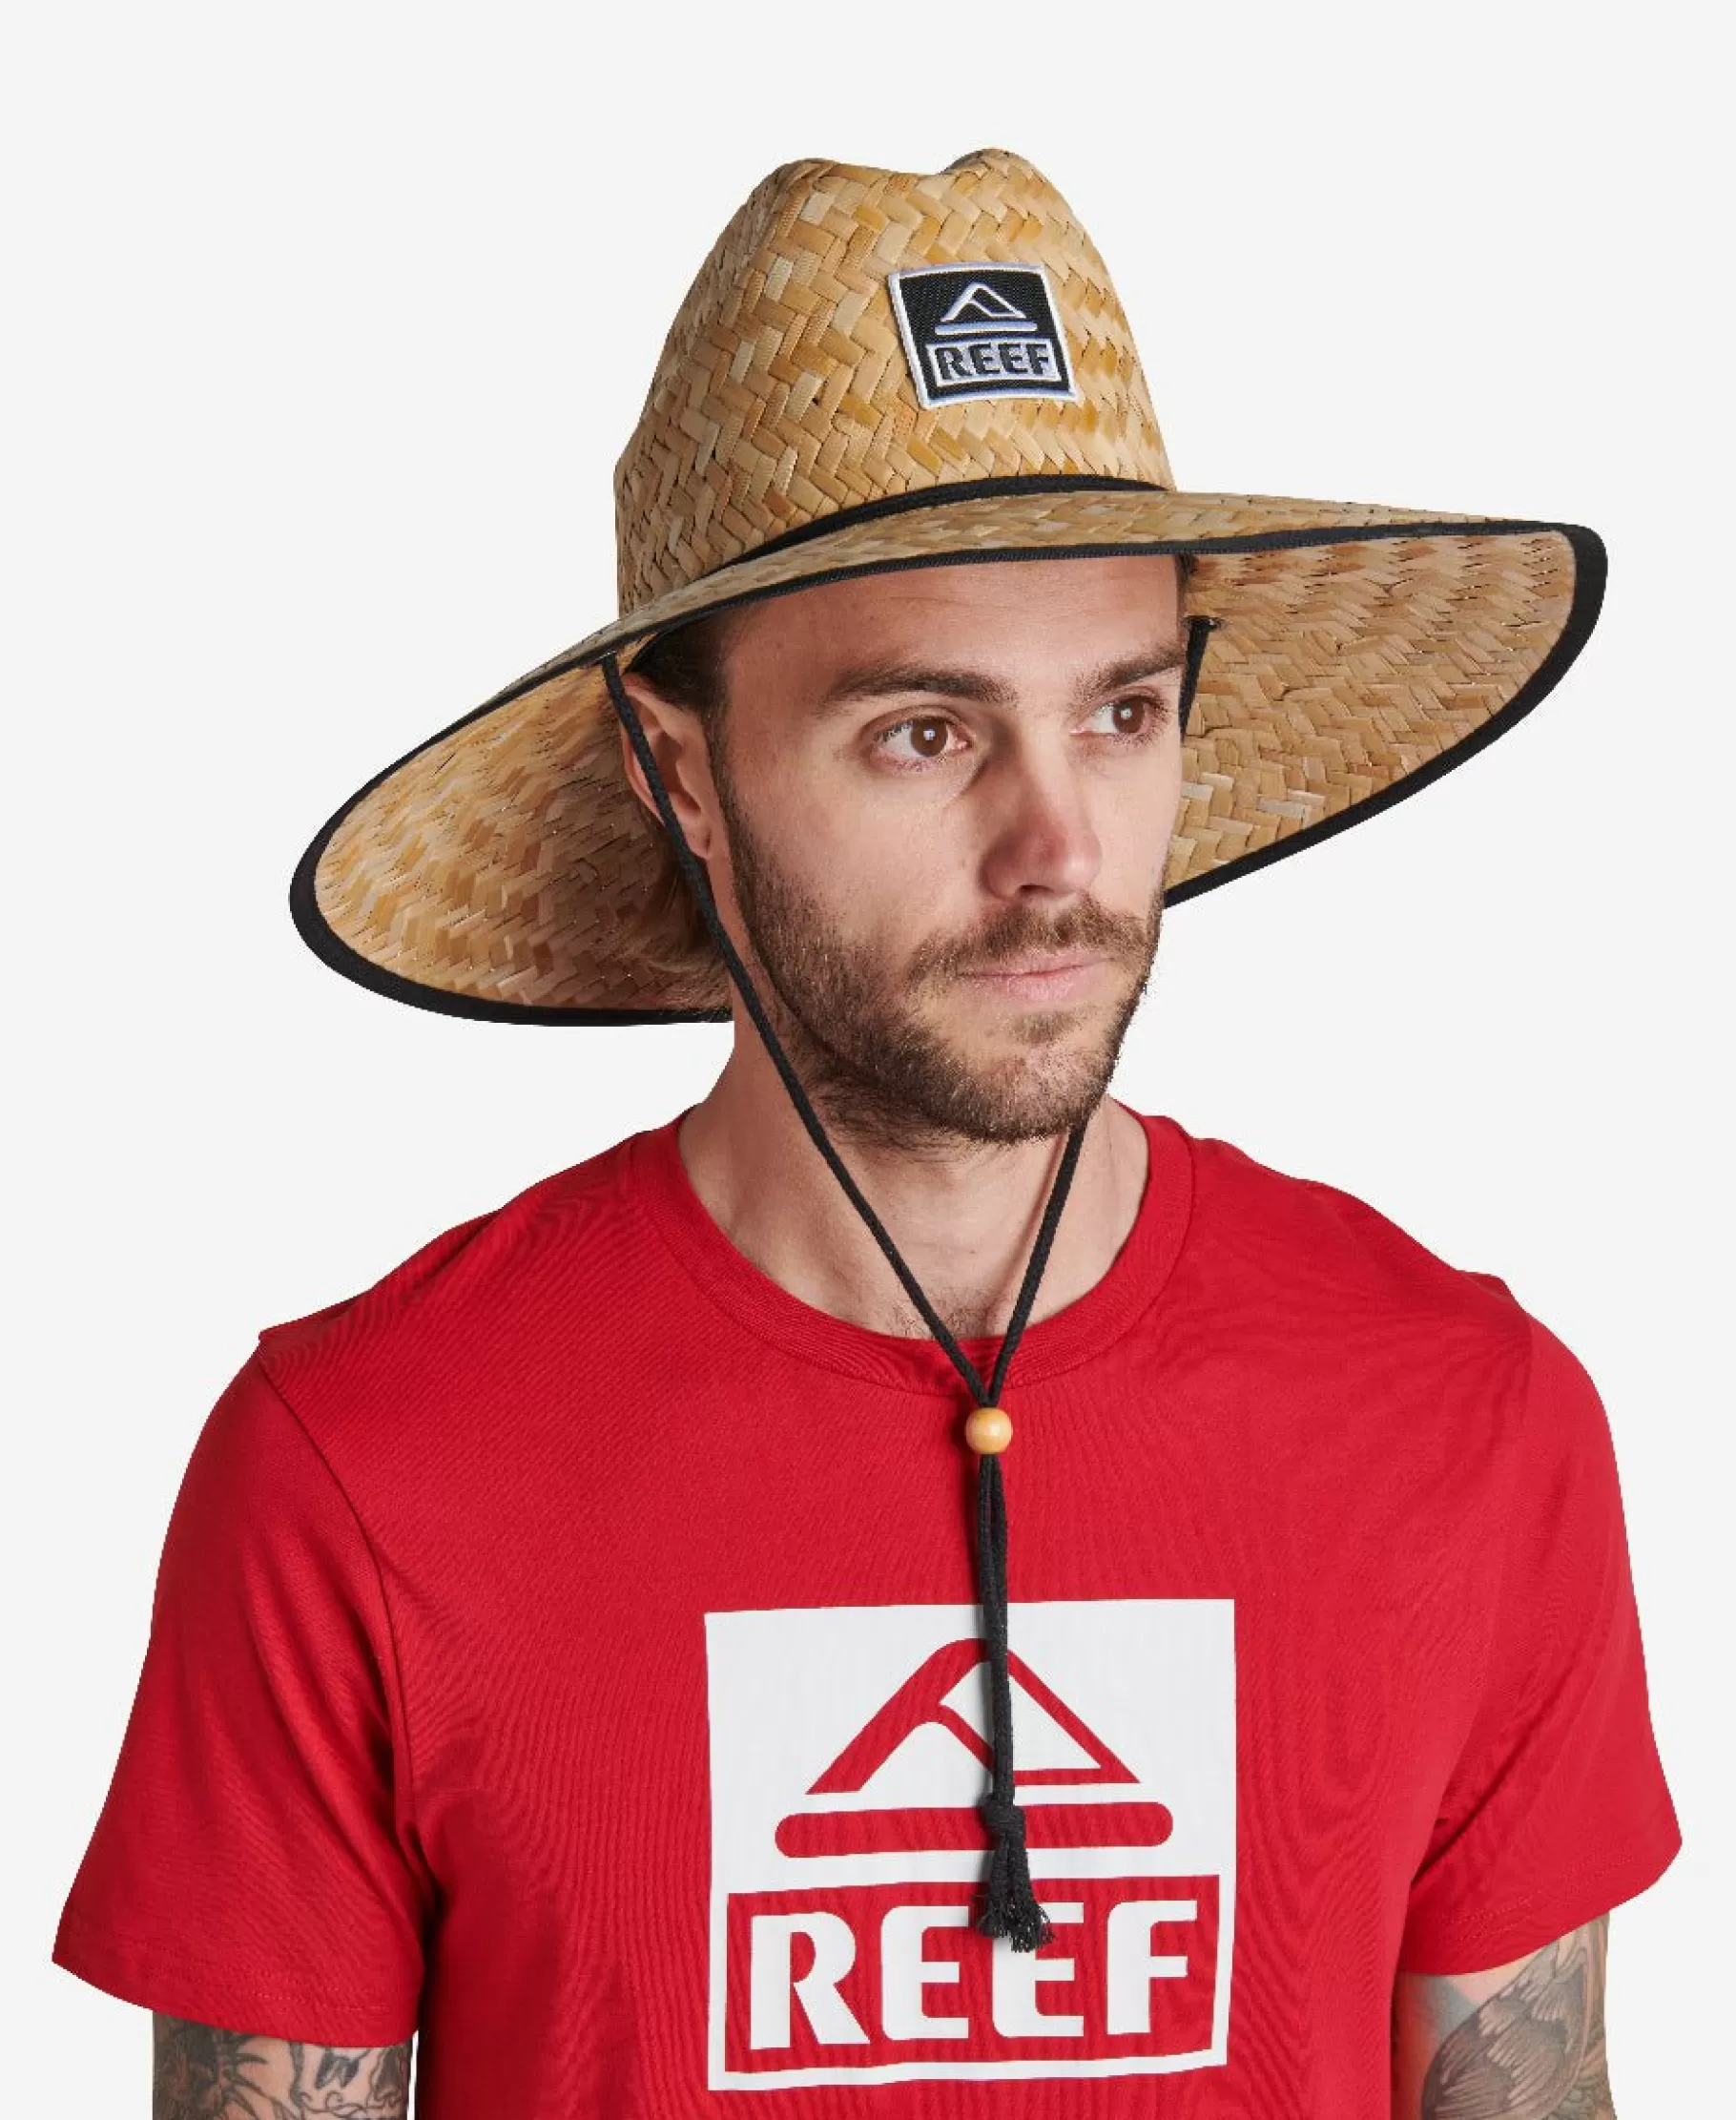 Men REEF Headwear & Accessories>Downpour Straw Hat